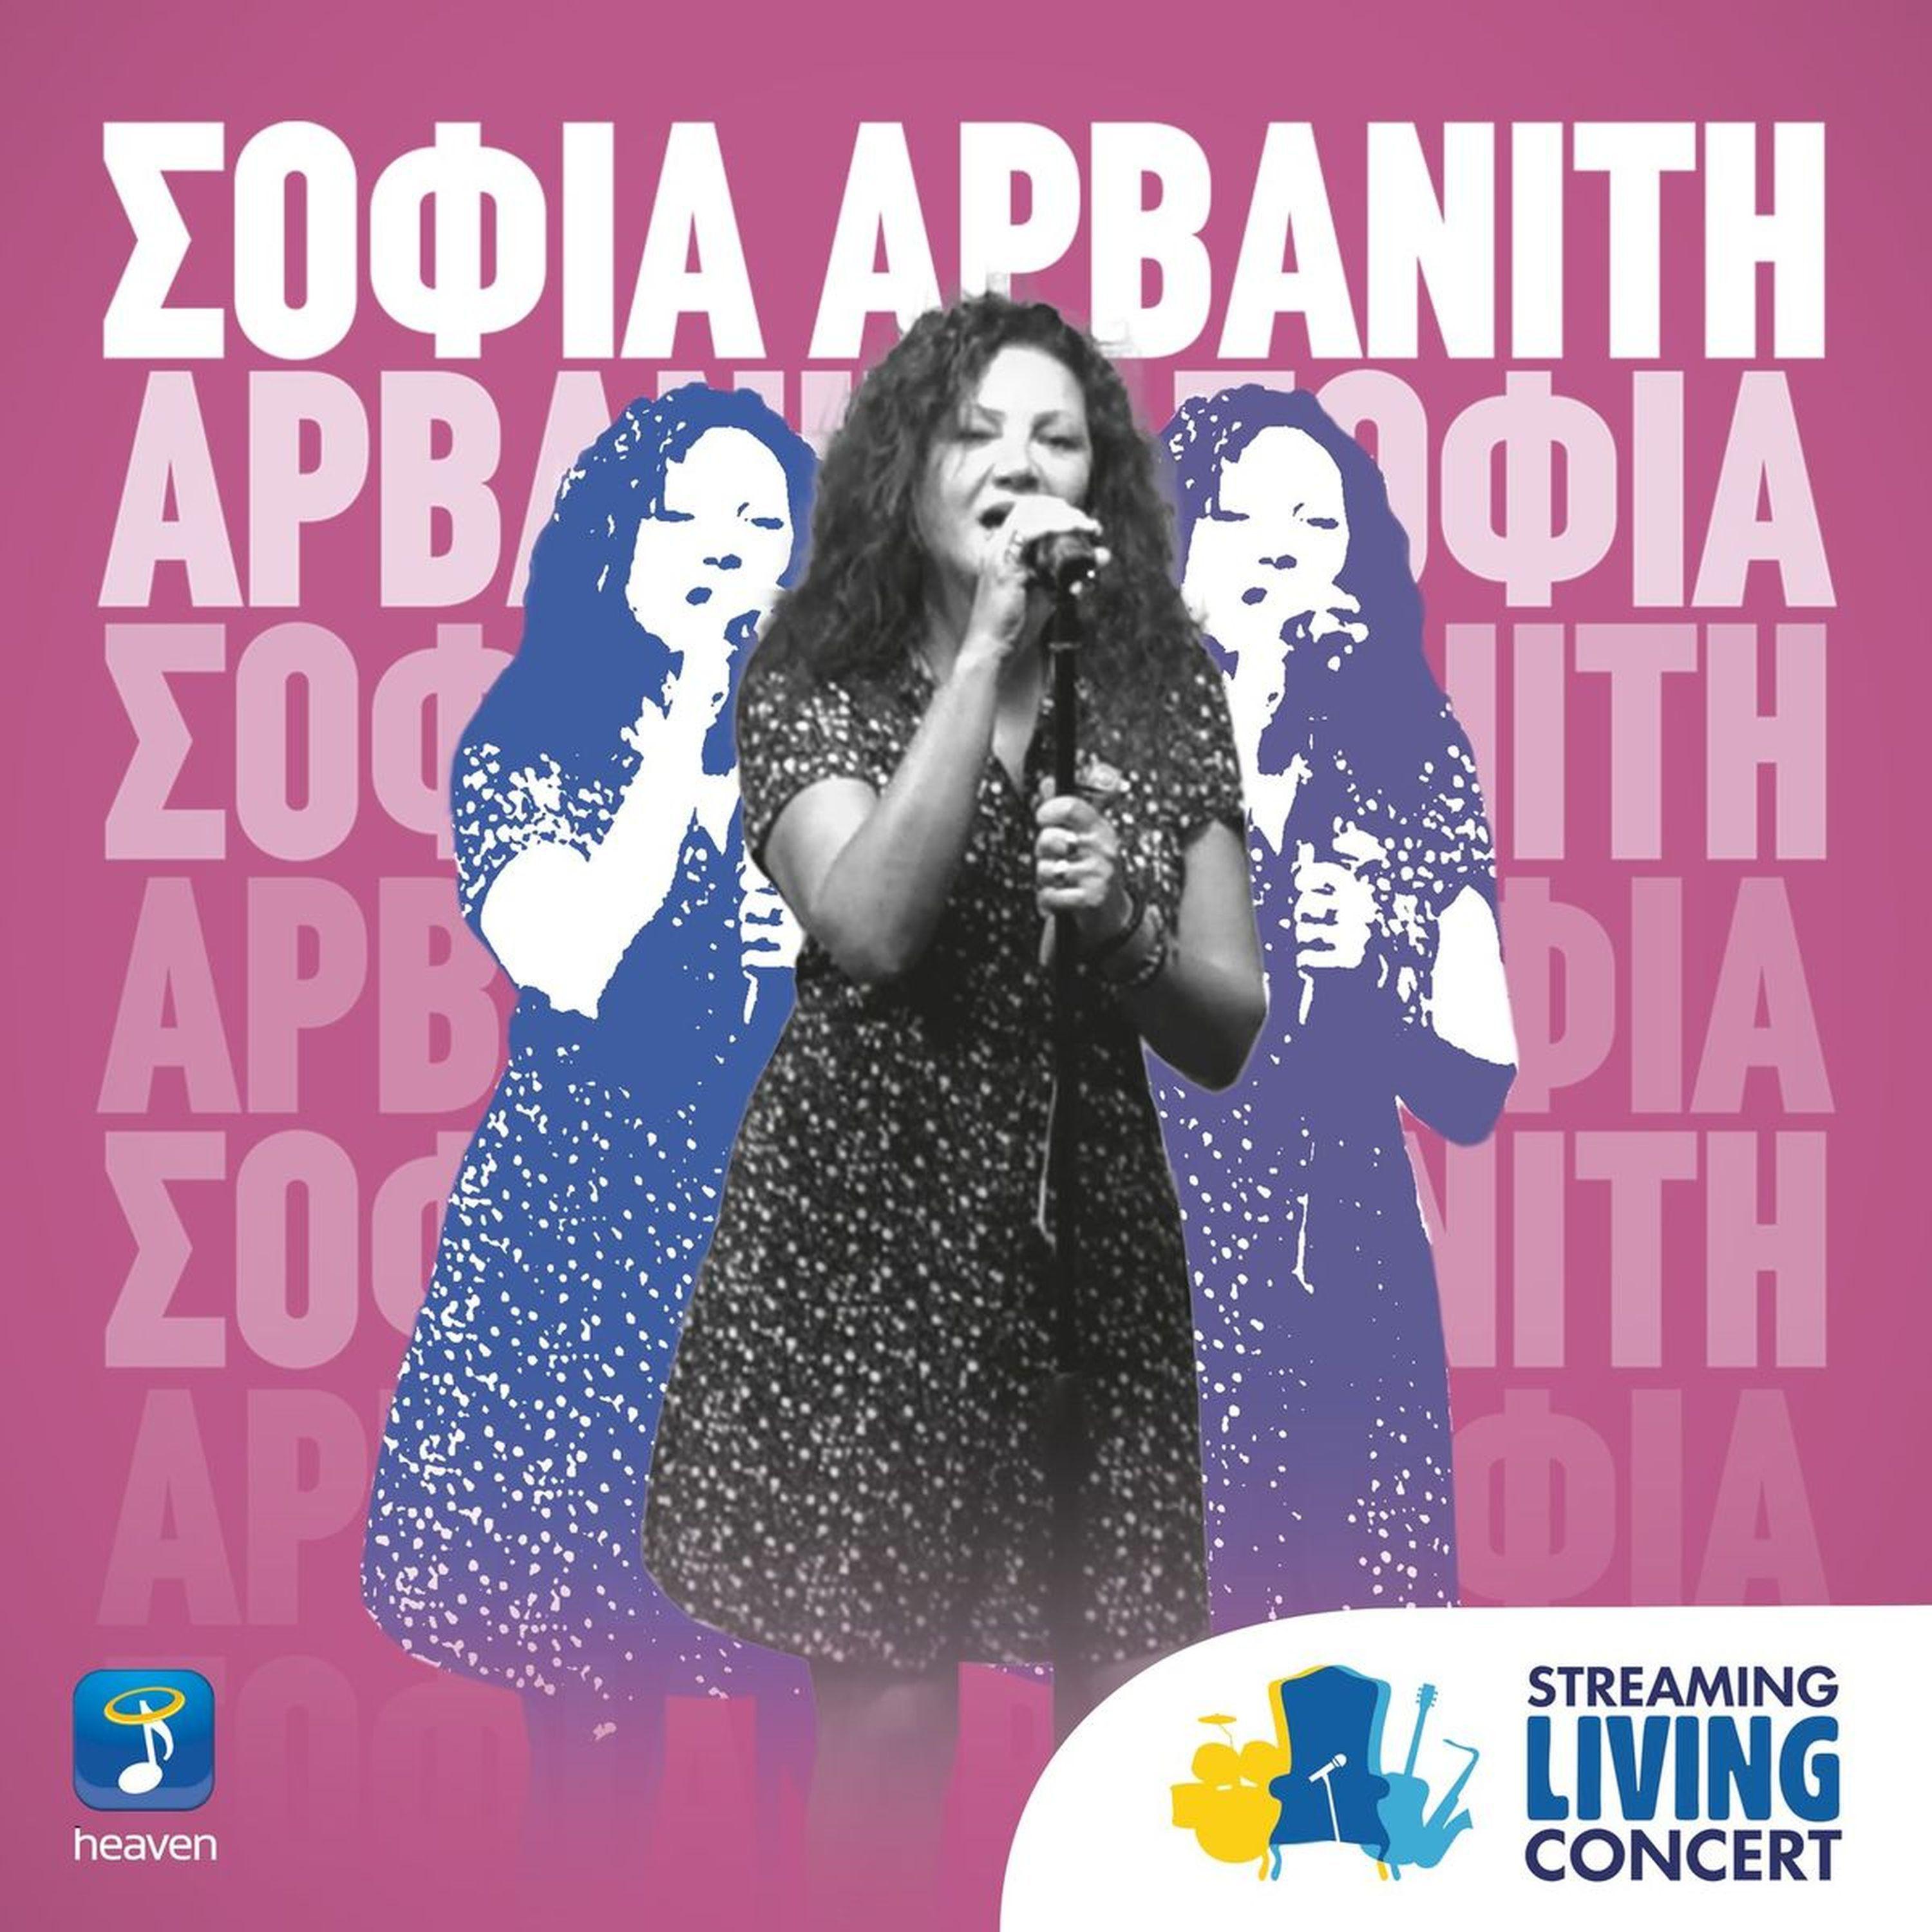 Sofia Arvaniti - Sokolati (Streaming Living Concert)